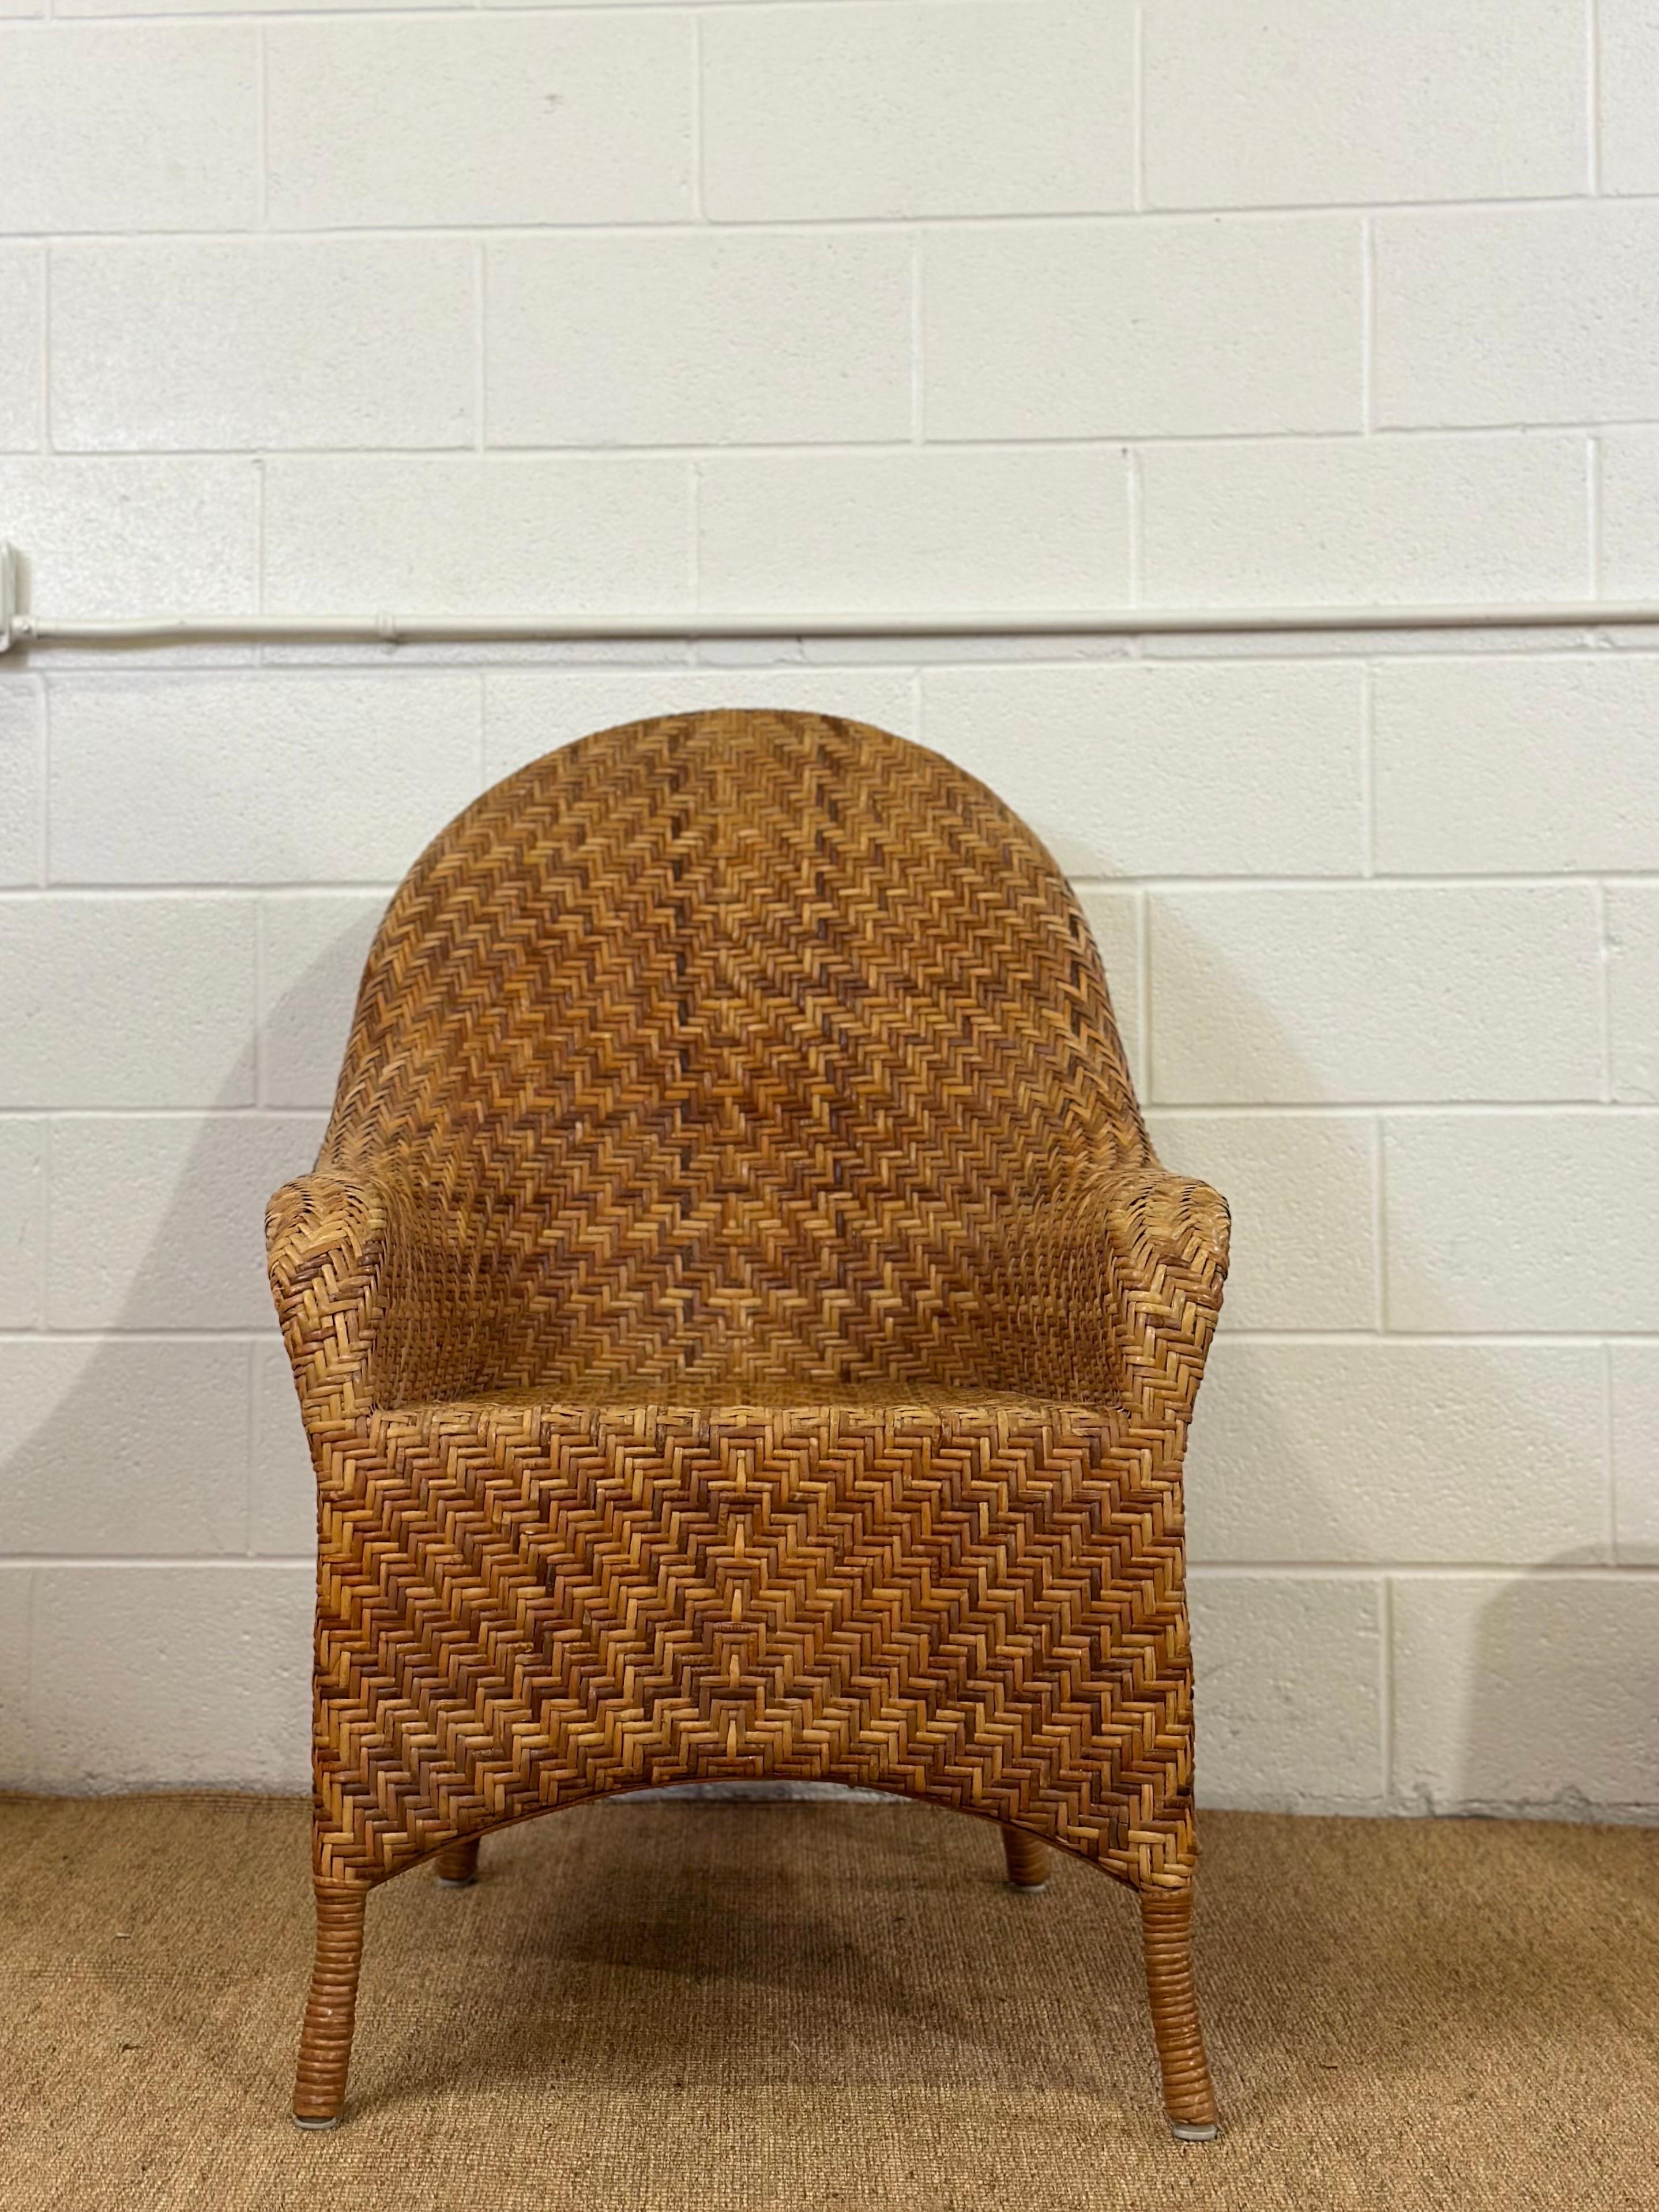 Vintage Organic Modern Woven Herringbone Wicker Rattan Dining Chairs - Set of 4  3